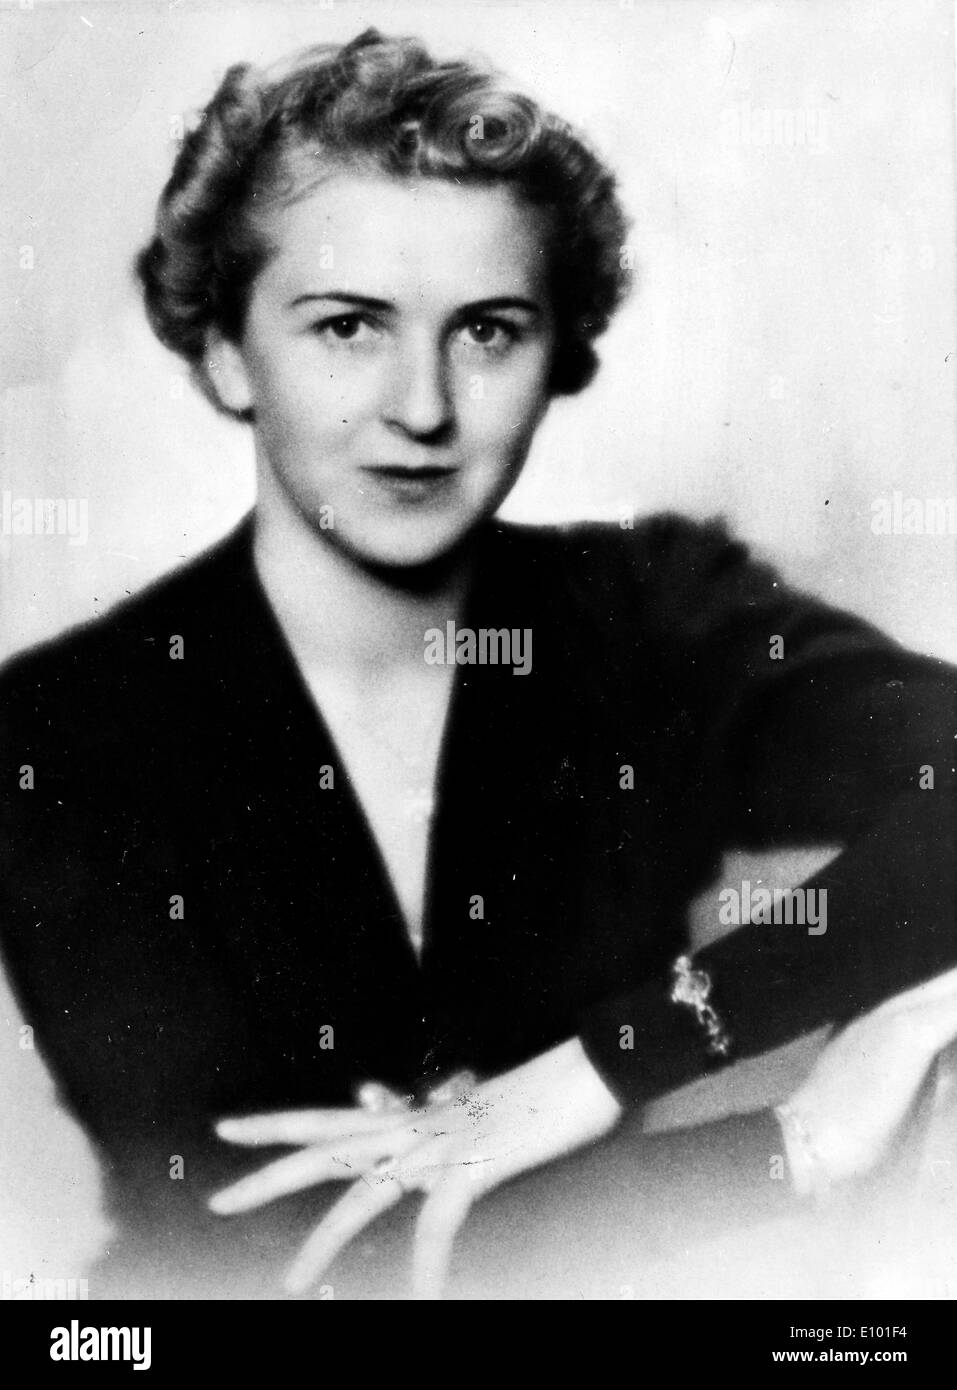 EVA ANNA PAULA BRAUN, died Eva Hitler. (February 6, 1912 April 30, 1945) was the longtime companion of Adolf Hitler and briefly Stock Photo